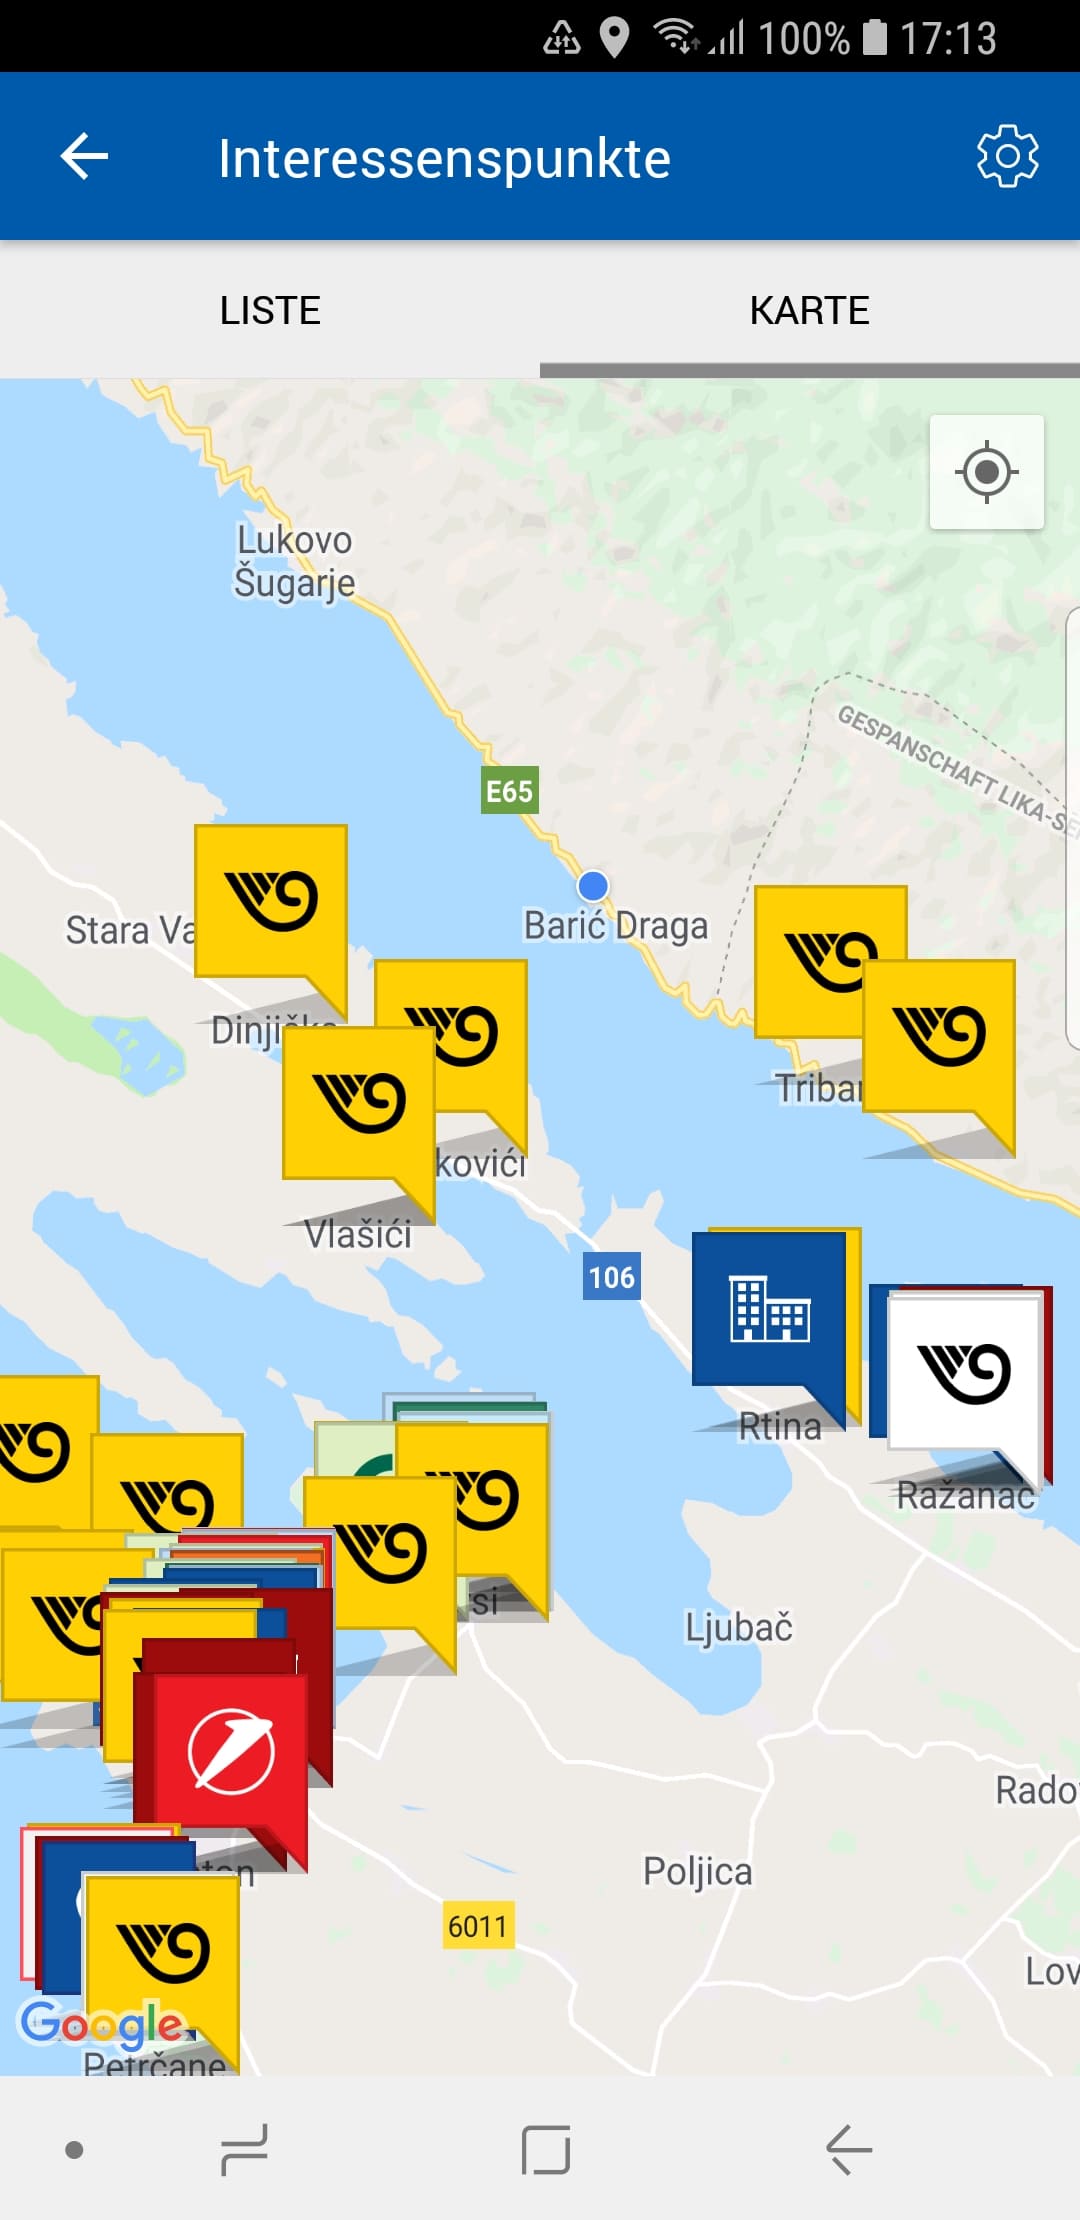 Verkehrsinfo in Kroatien - HAK – Screenshot Android